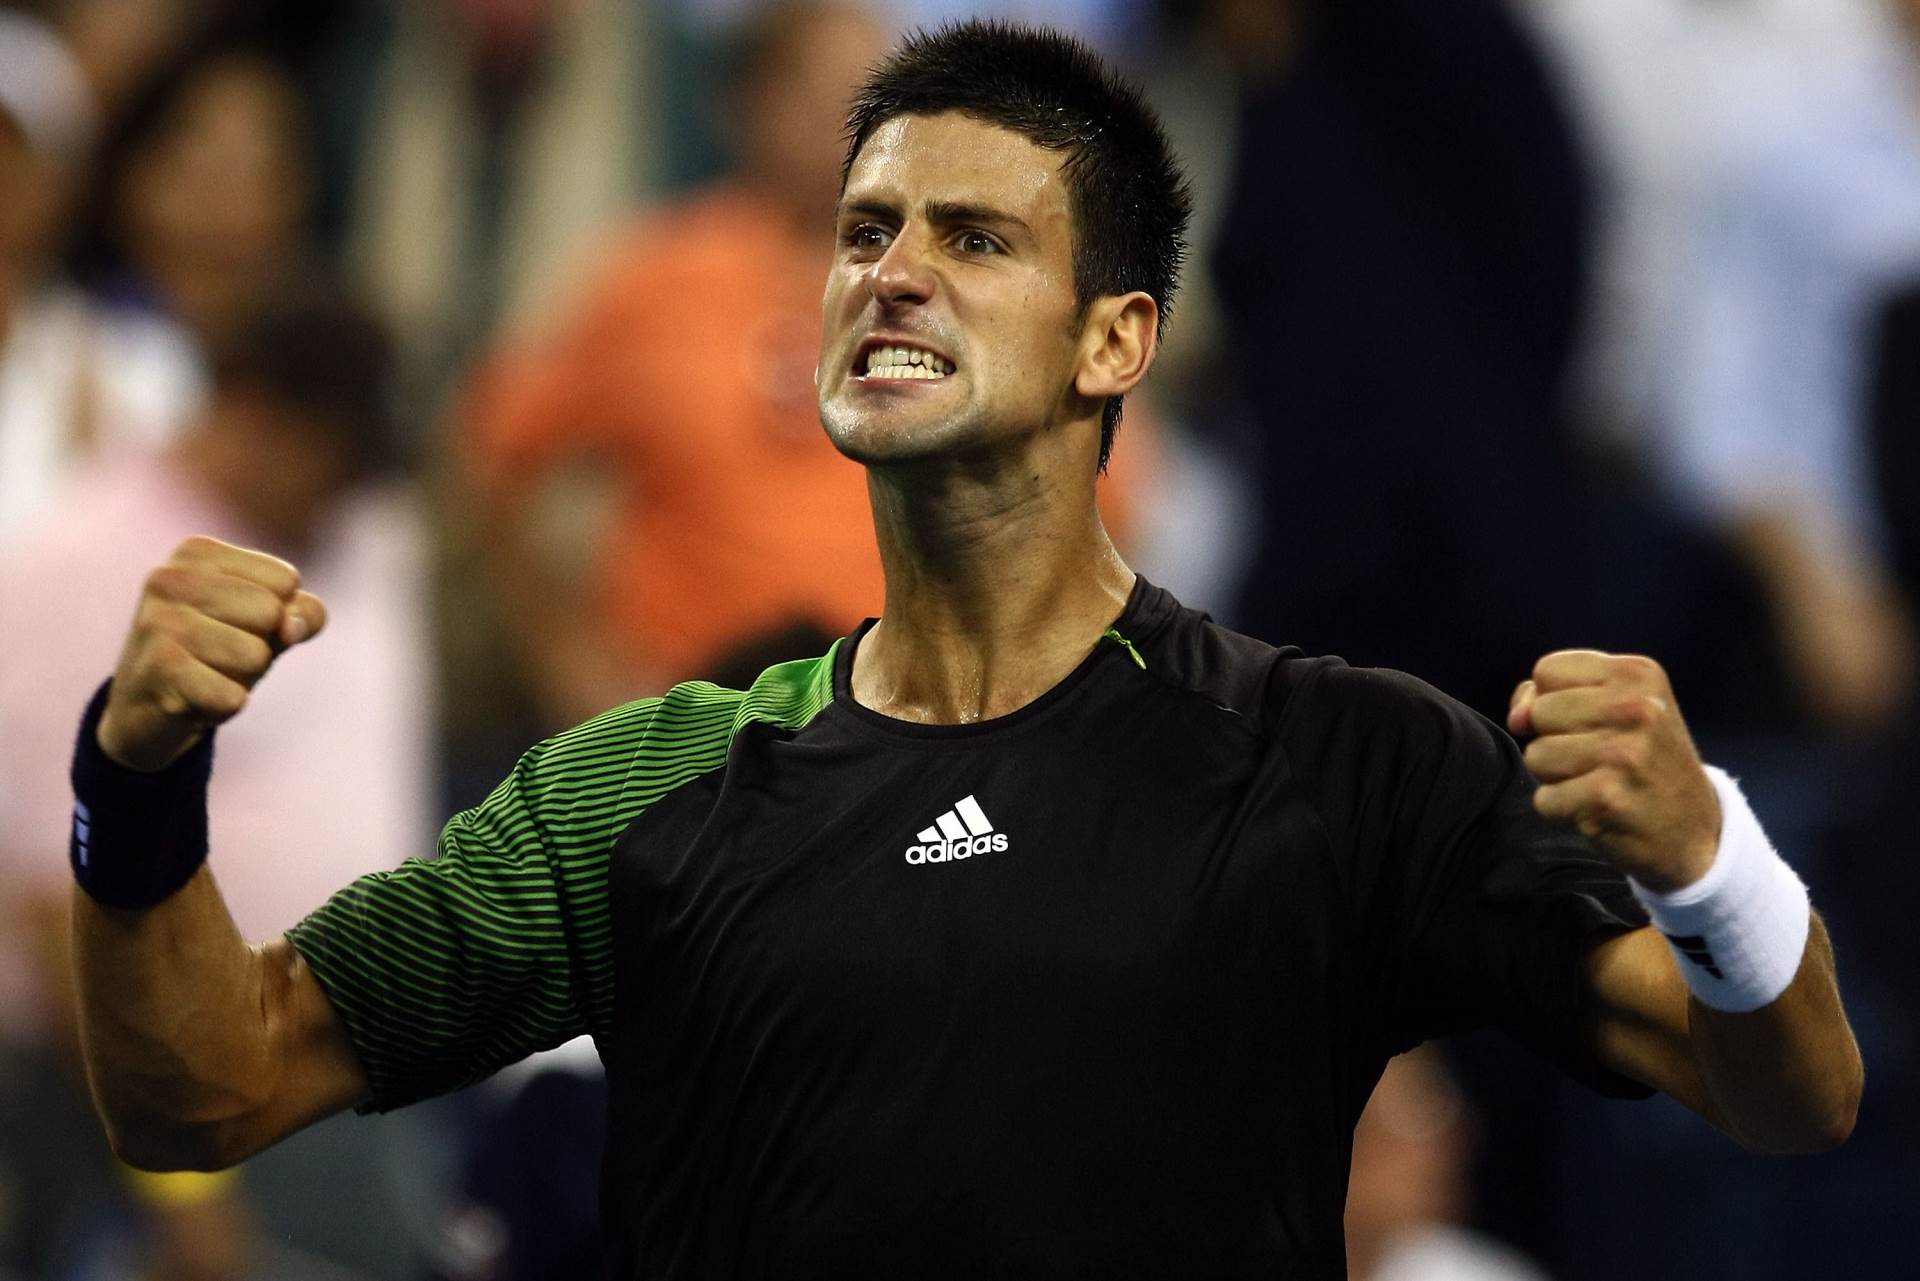  Novak-Djokovic-najbolji-teniser-svih-vremena-Djokovic-najvise-gren-slem-trofeja-Pol-Dzab 